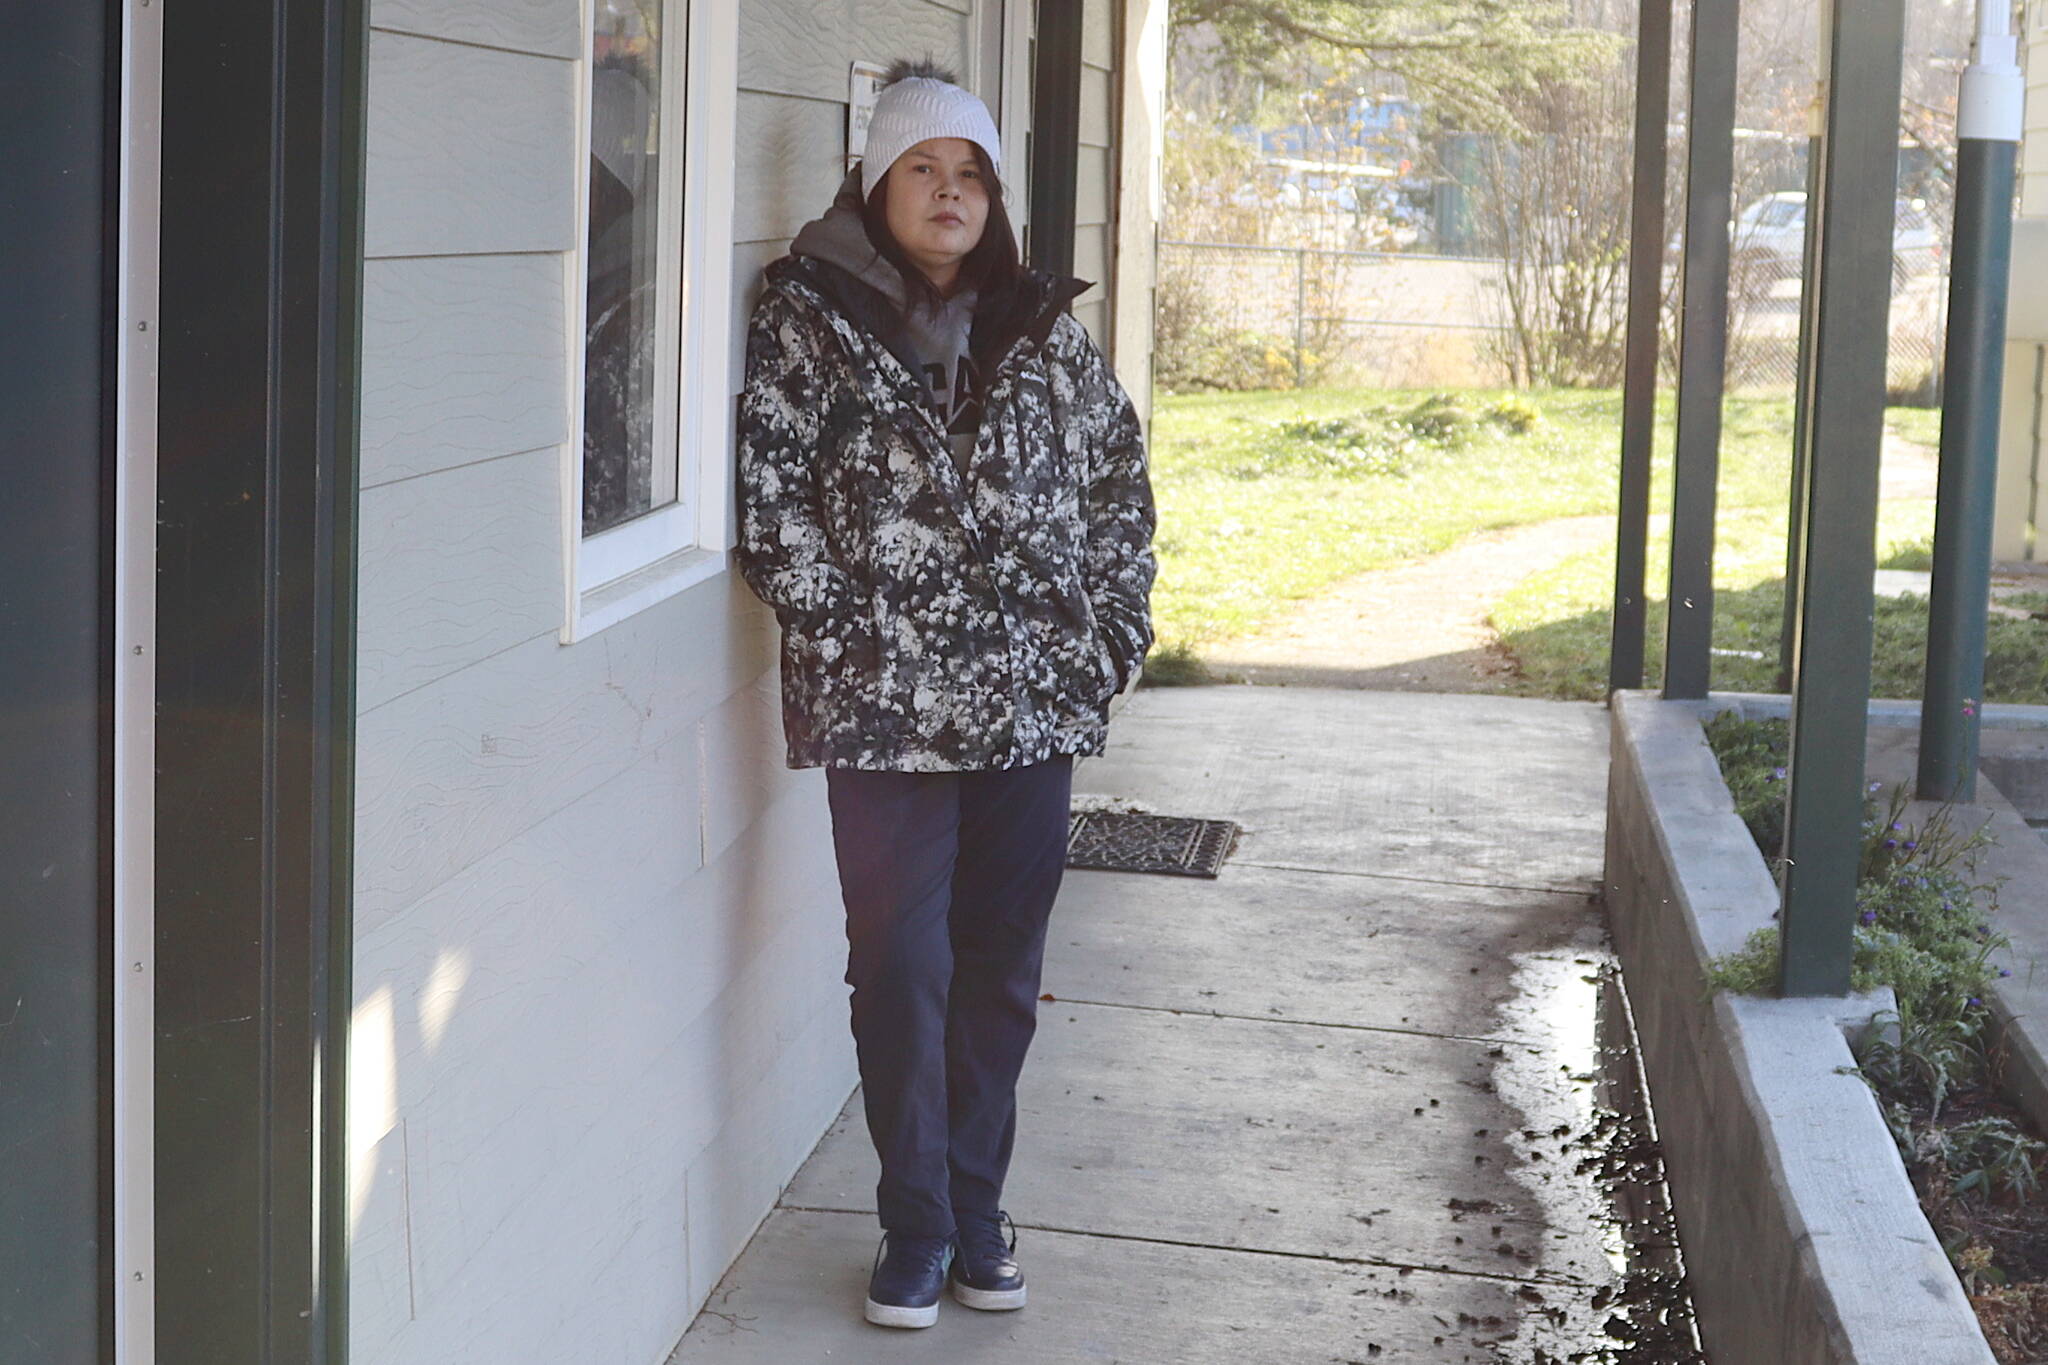 Kaley Nauska stands outside her smoke-damaged apartment on Monday, a day after a fire at her next-door neighbor’s apartment. (Meredith Jordan / Juneau Empire)